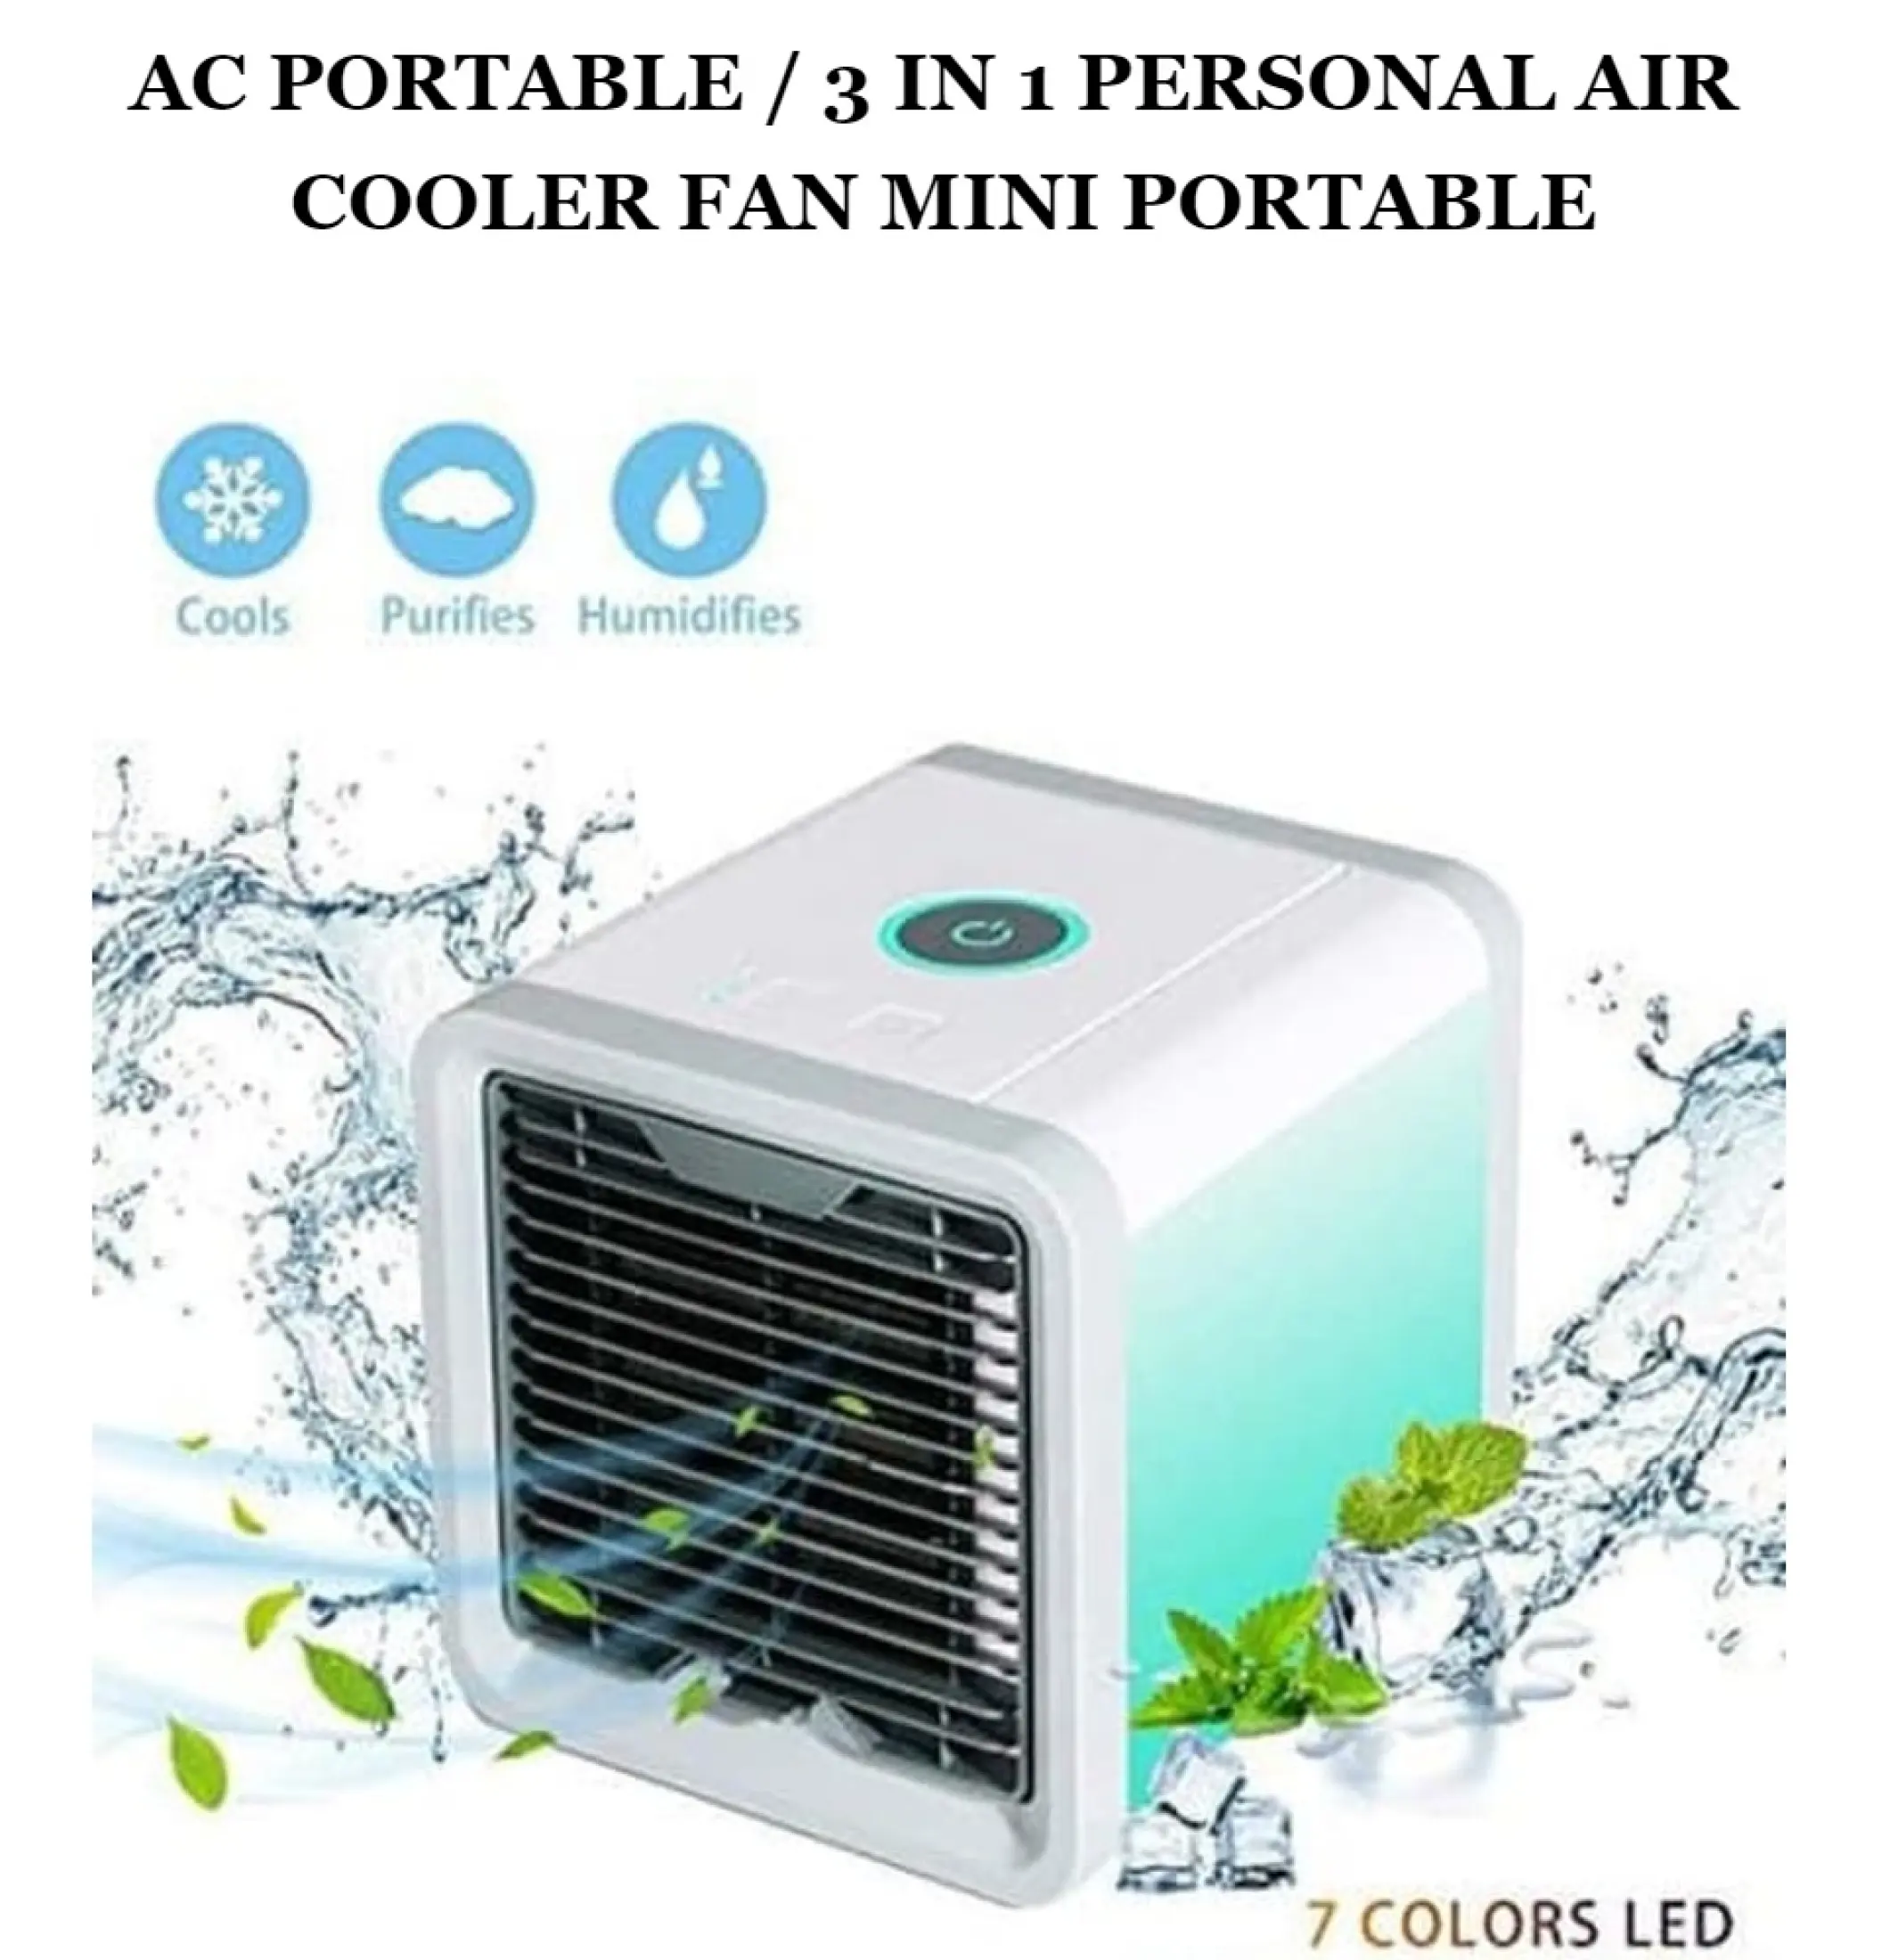 Ac Portable 3 In 1 Personal Air Cooler Fan Mini Portable Lazada Indonesia